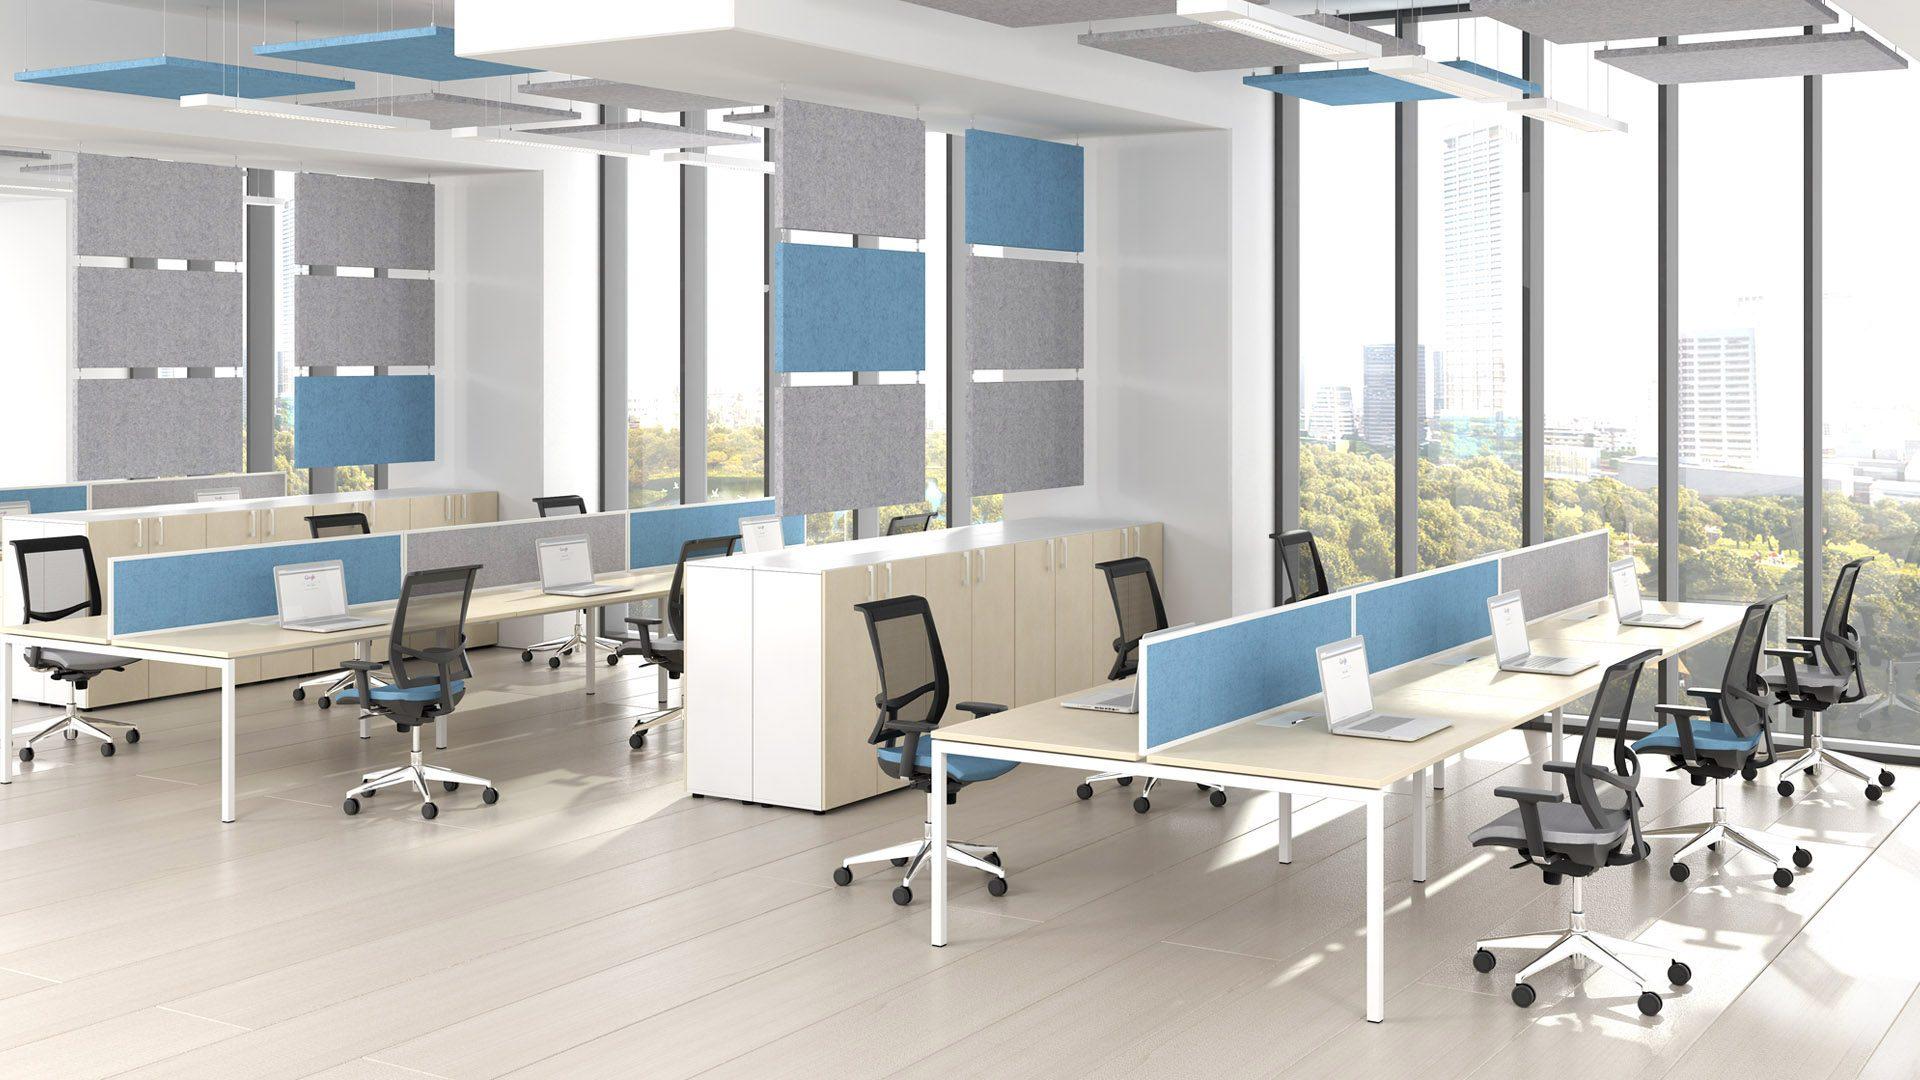 Open plan office layout using Nova U-leg bench desking and Nova storage cabinets